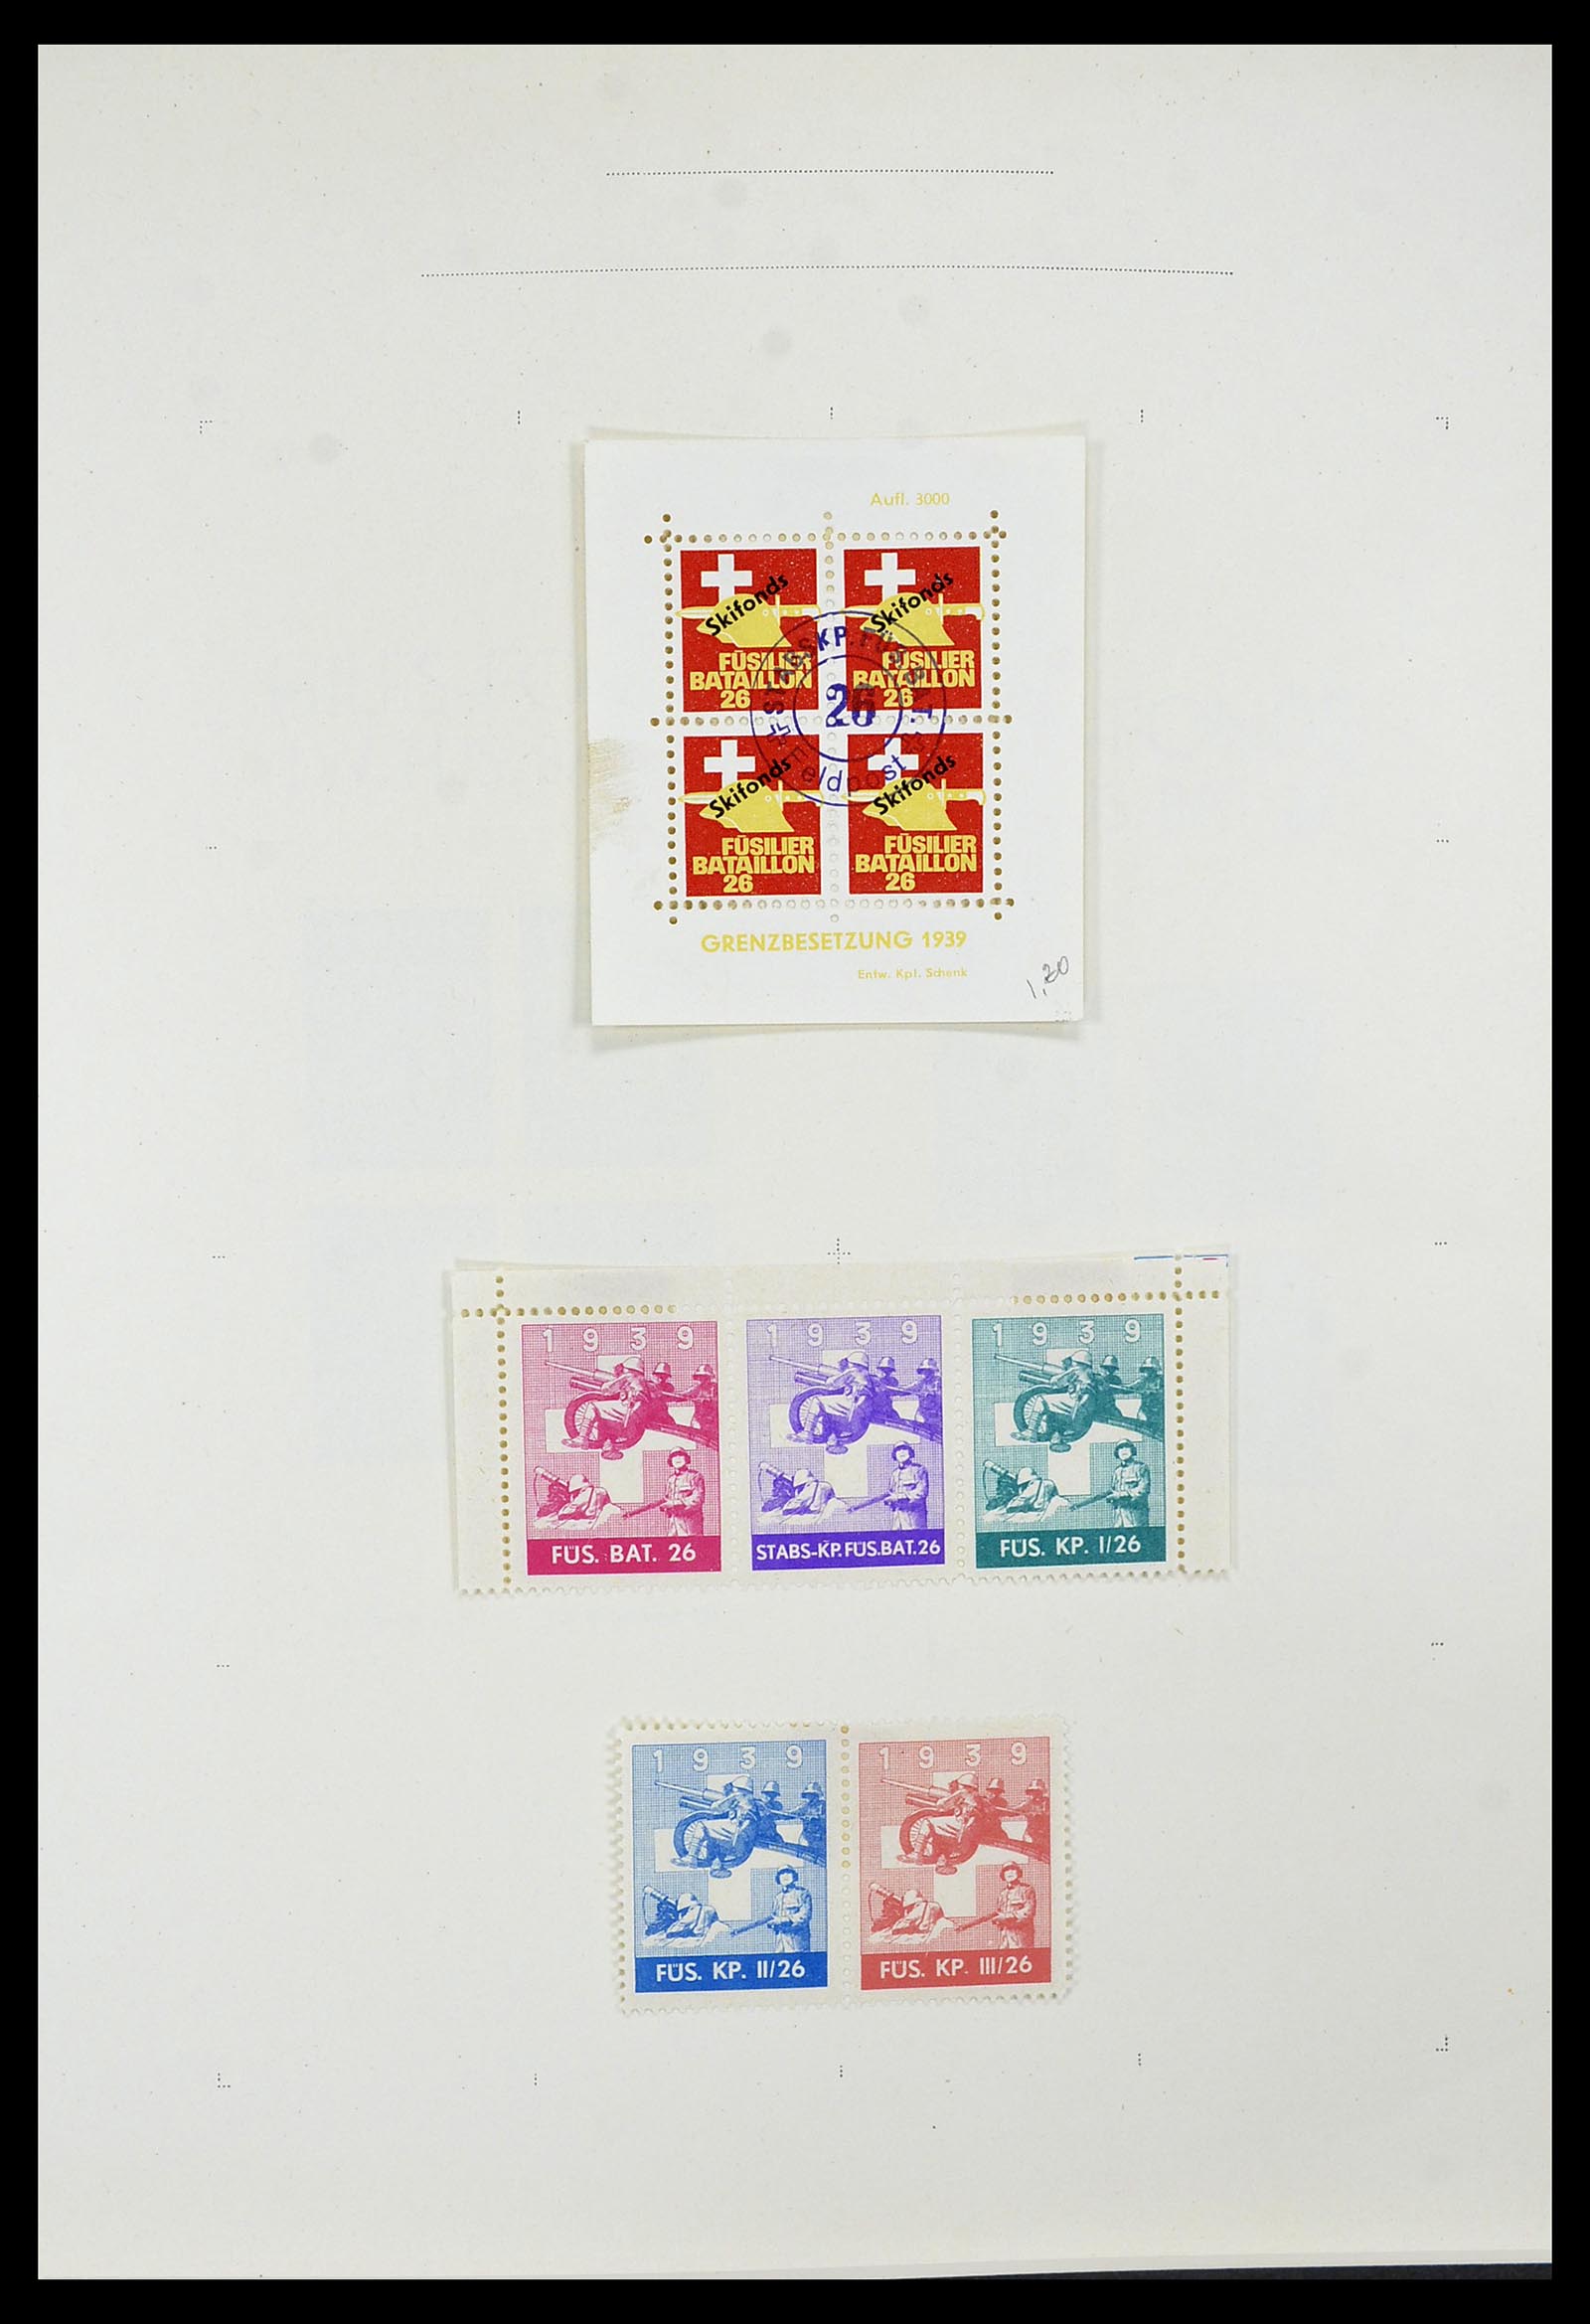 34234 041 - Stamp collection 34234 Switzerland soldier stamps 1939-1945.